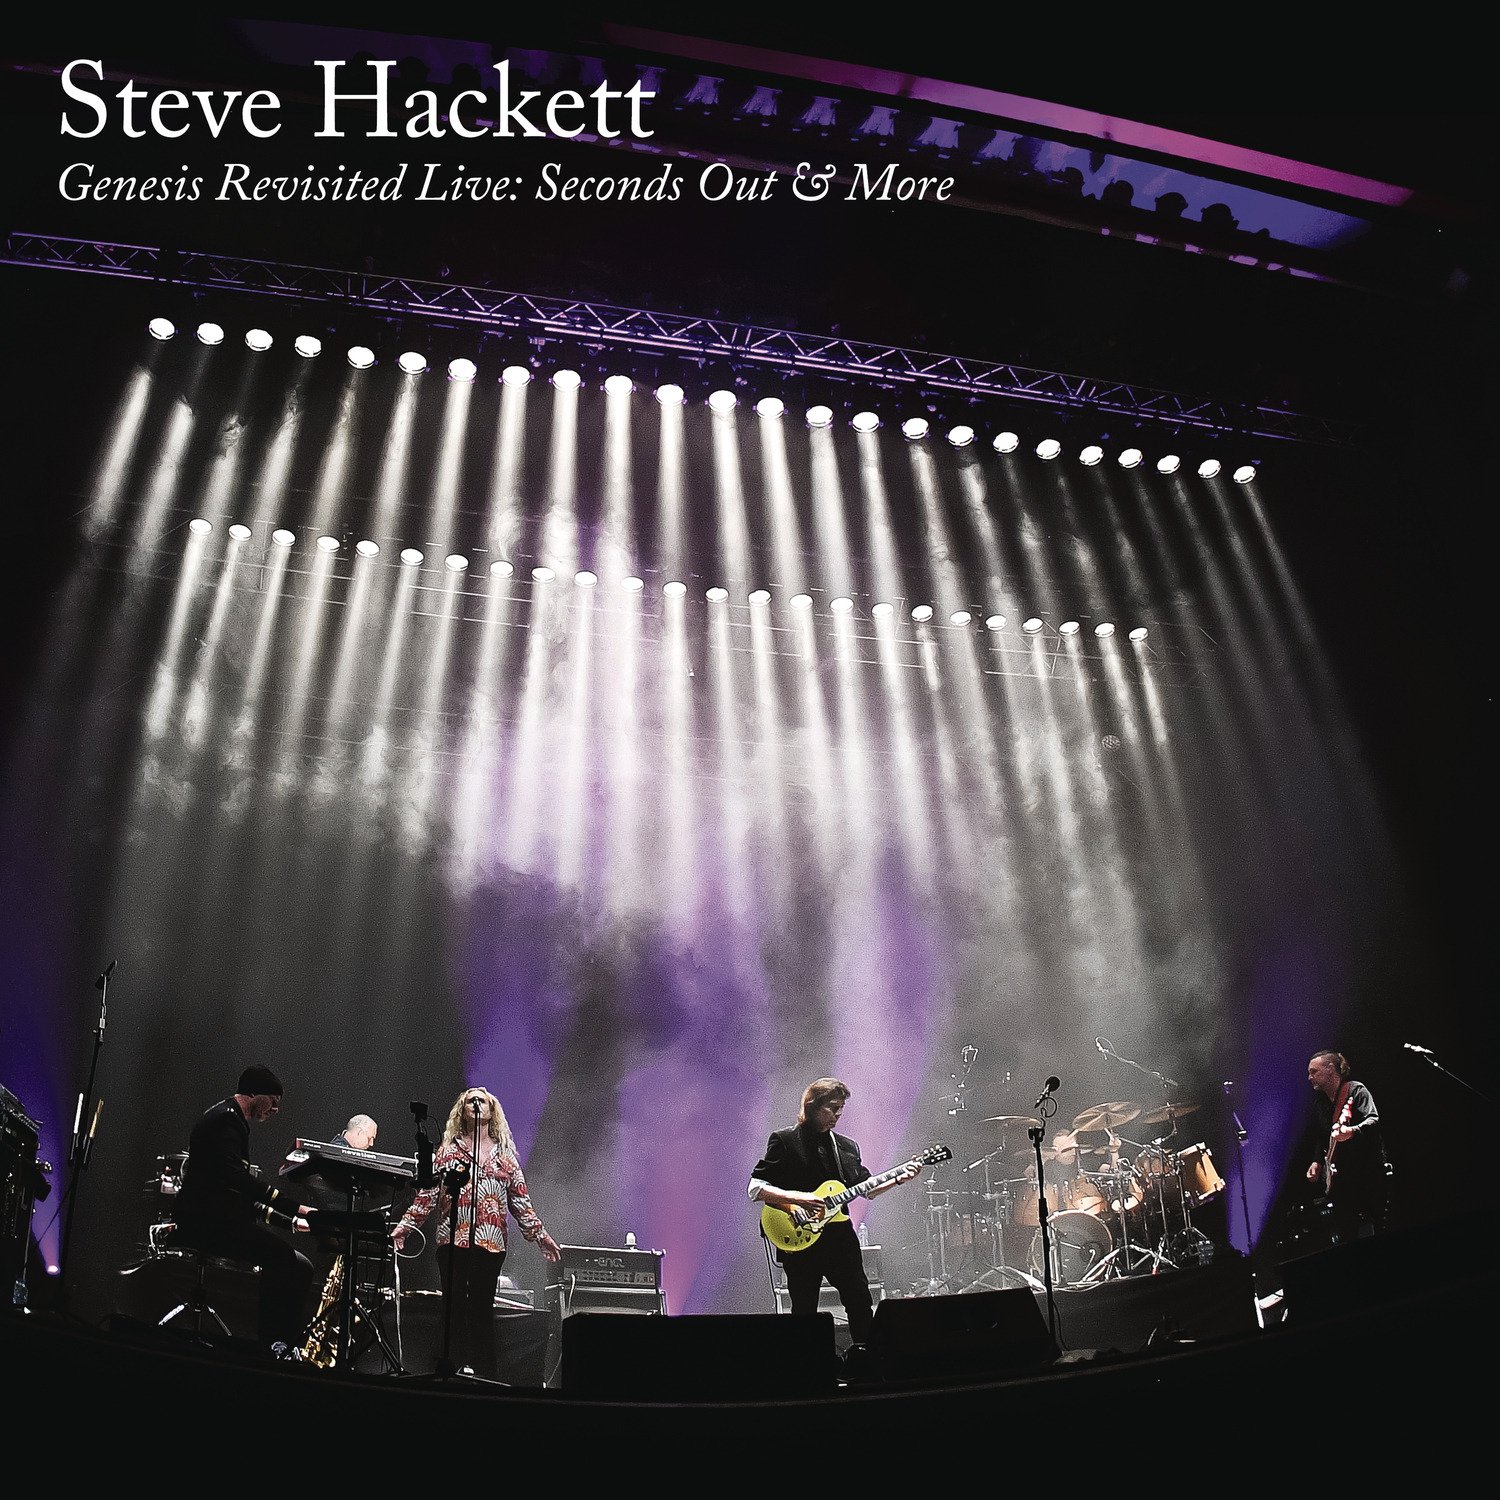 Hackett, Steve - Genesis Revisited Live: Seconds Out & More, Vinyl